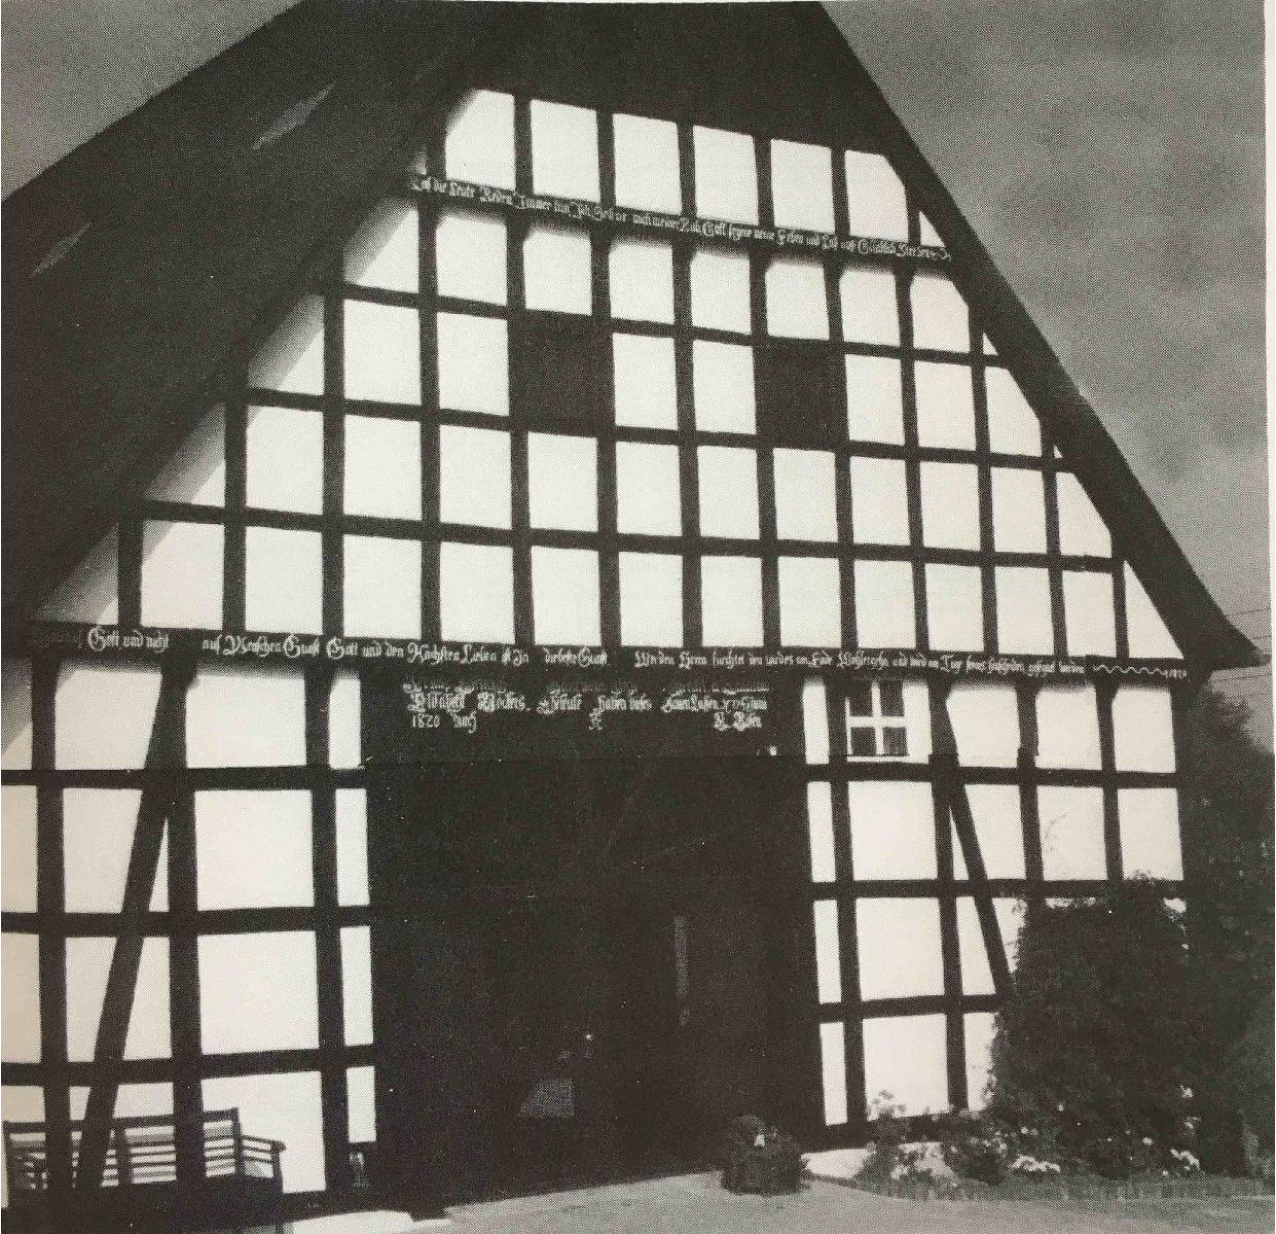 The Barkmeyer 'No. 14' Farmhouse